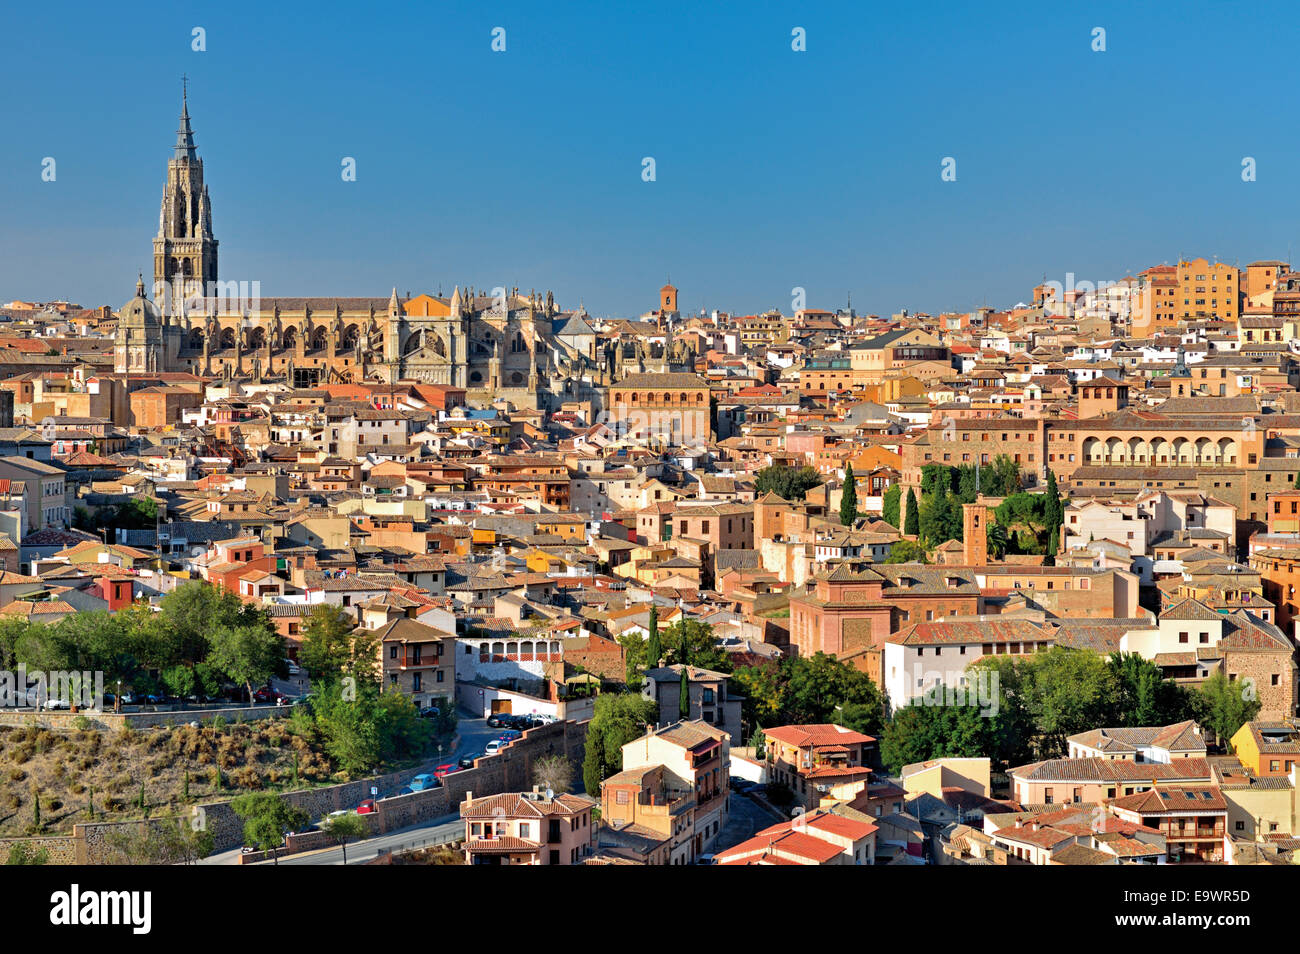 Spain, Castilla-La Mancha: View to the historic town of Toledo Stock Photo